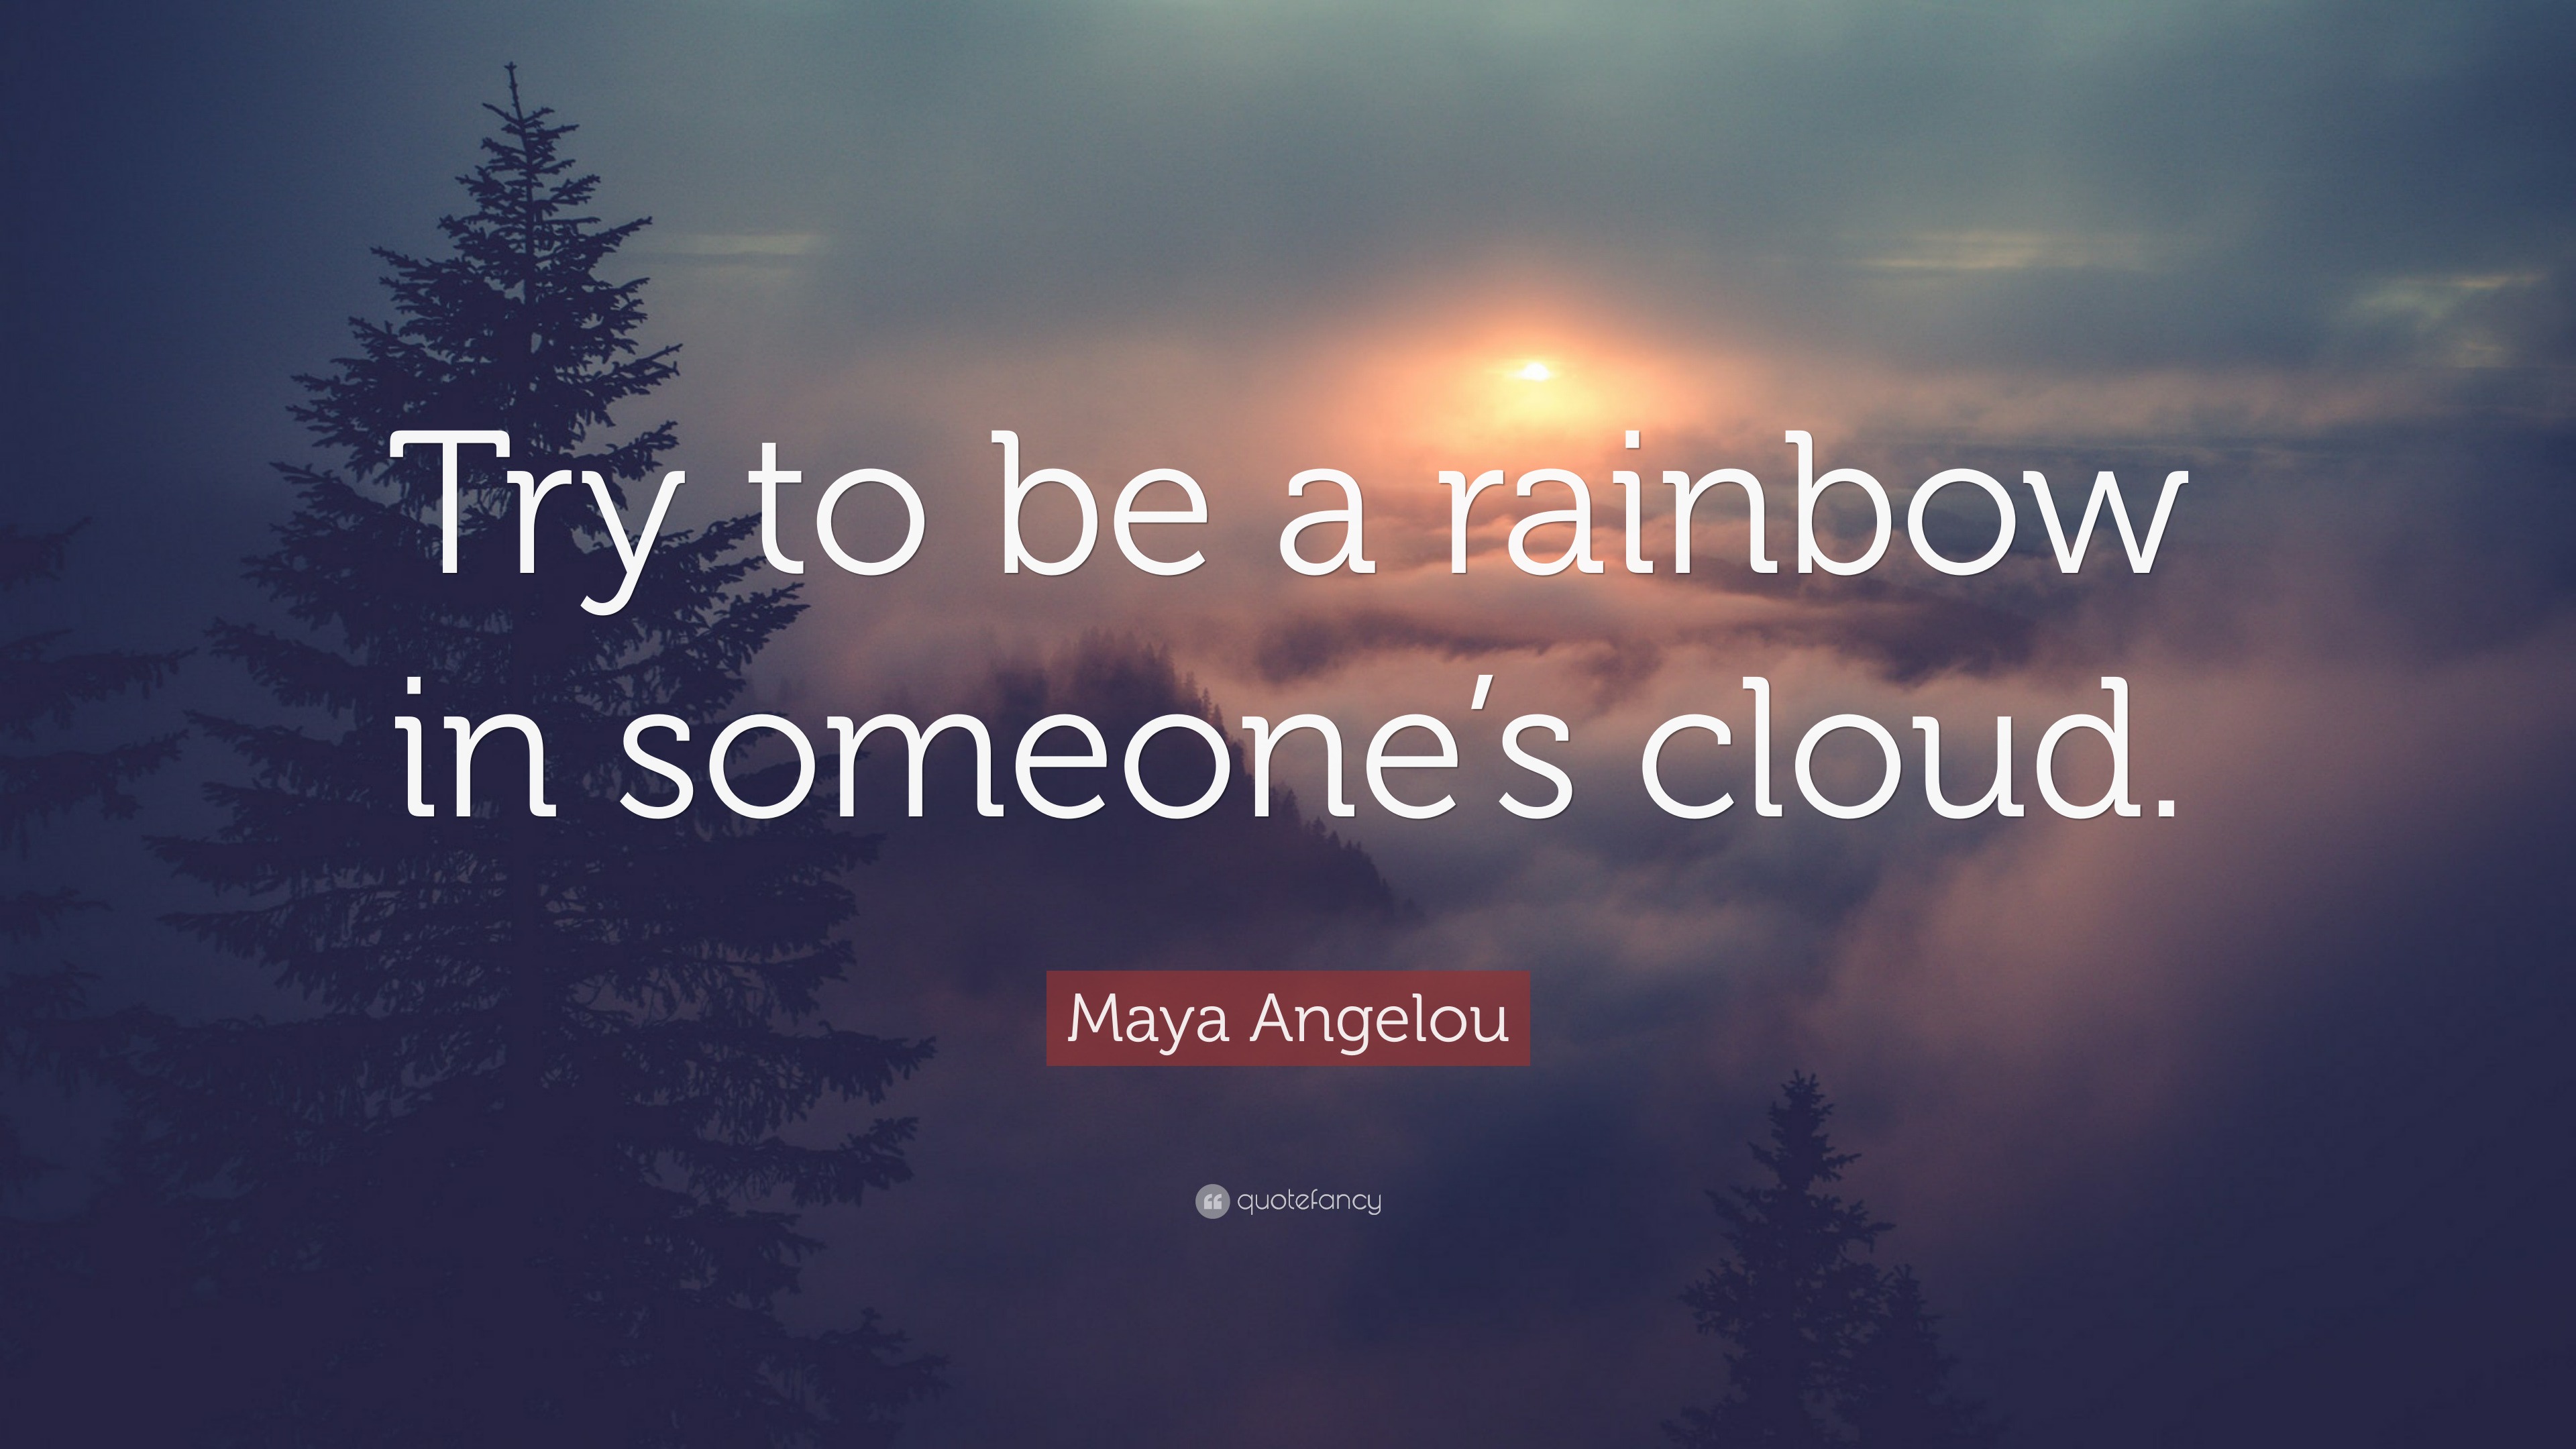 maya angelou rainbow quote